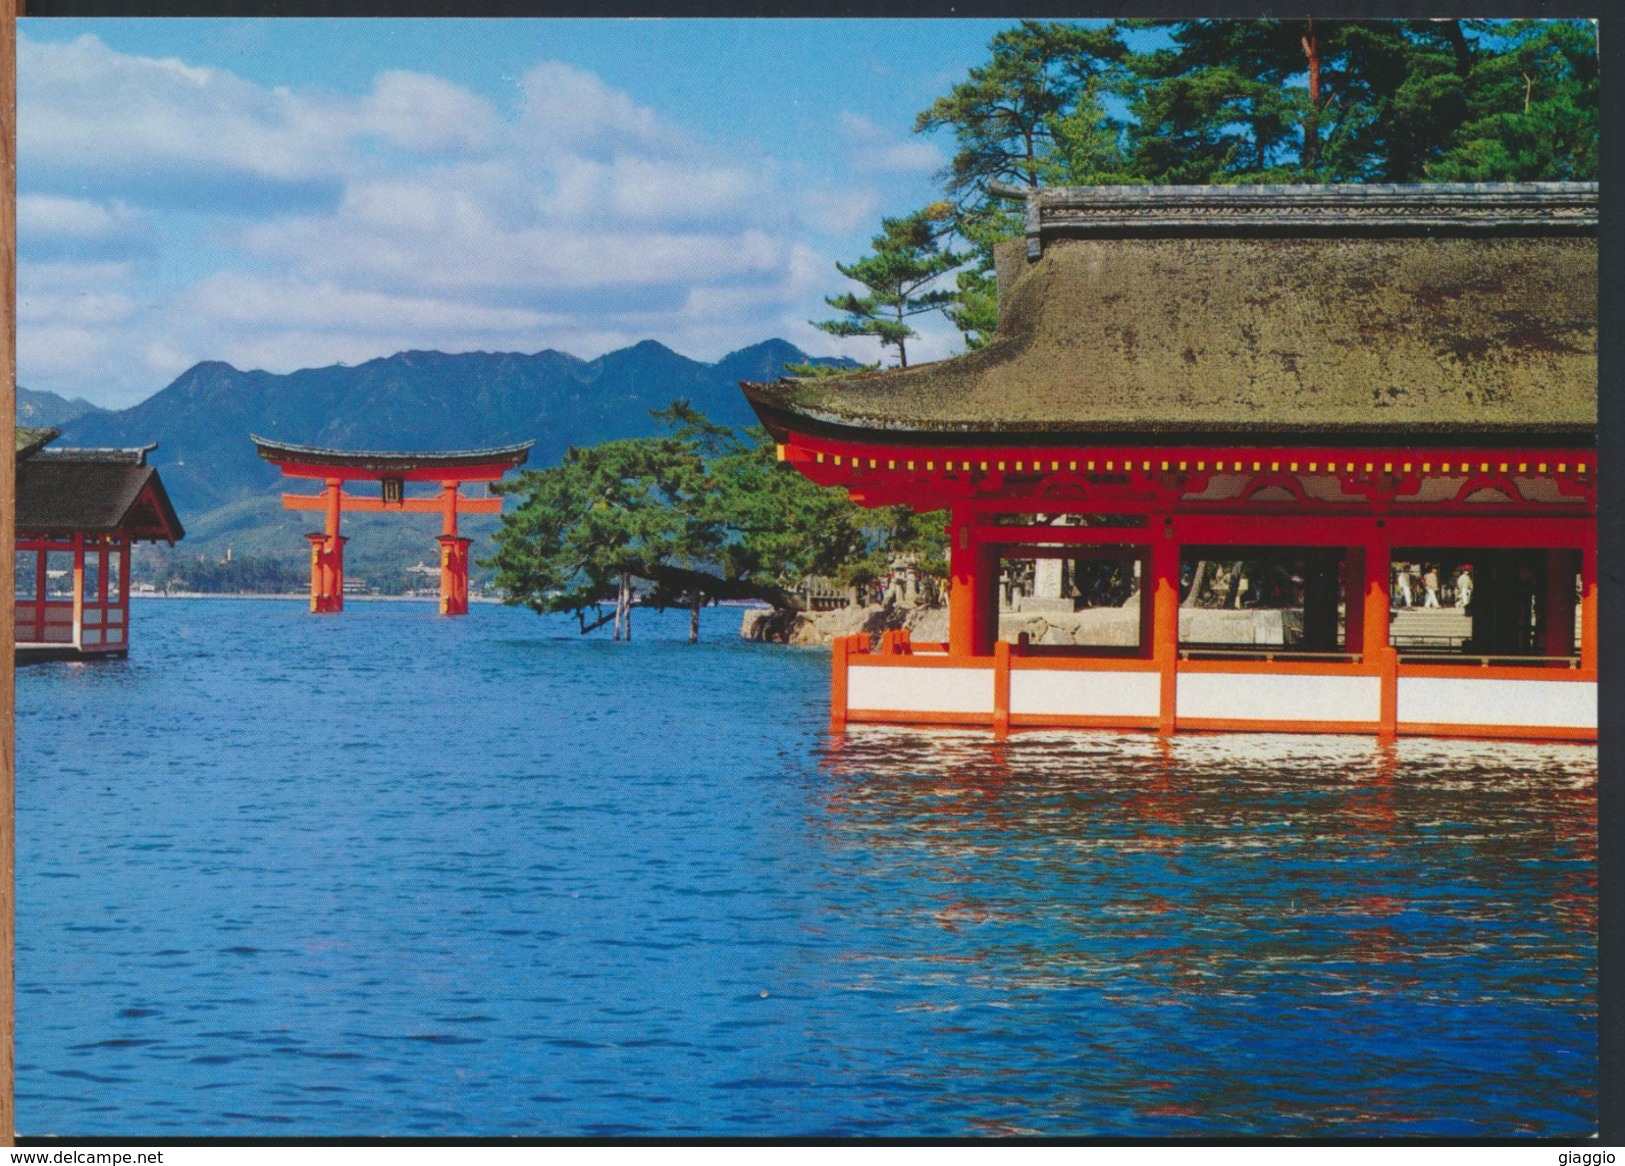 °°° 1662 - JAPAN - MIYAJIMA ISLAND - THE GREAT TORII VIEWED FROM THE CORRIDOR °°° - Hiroshima